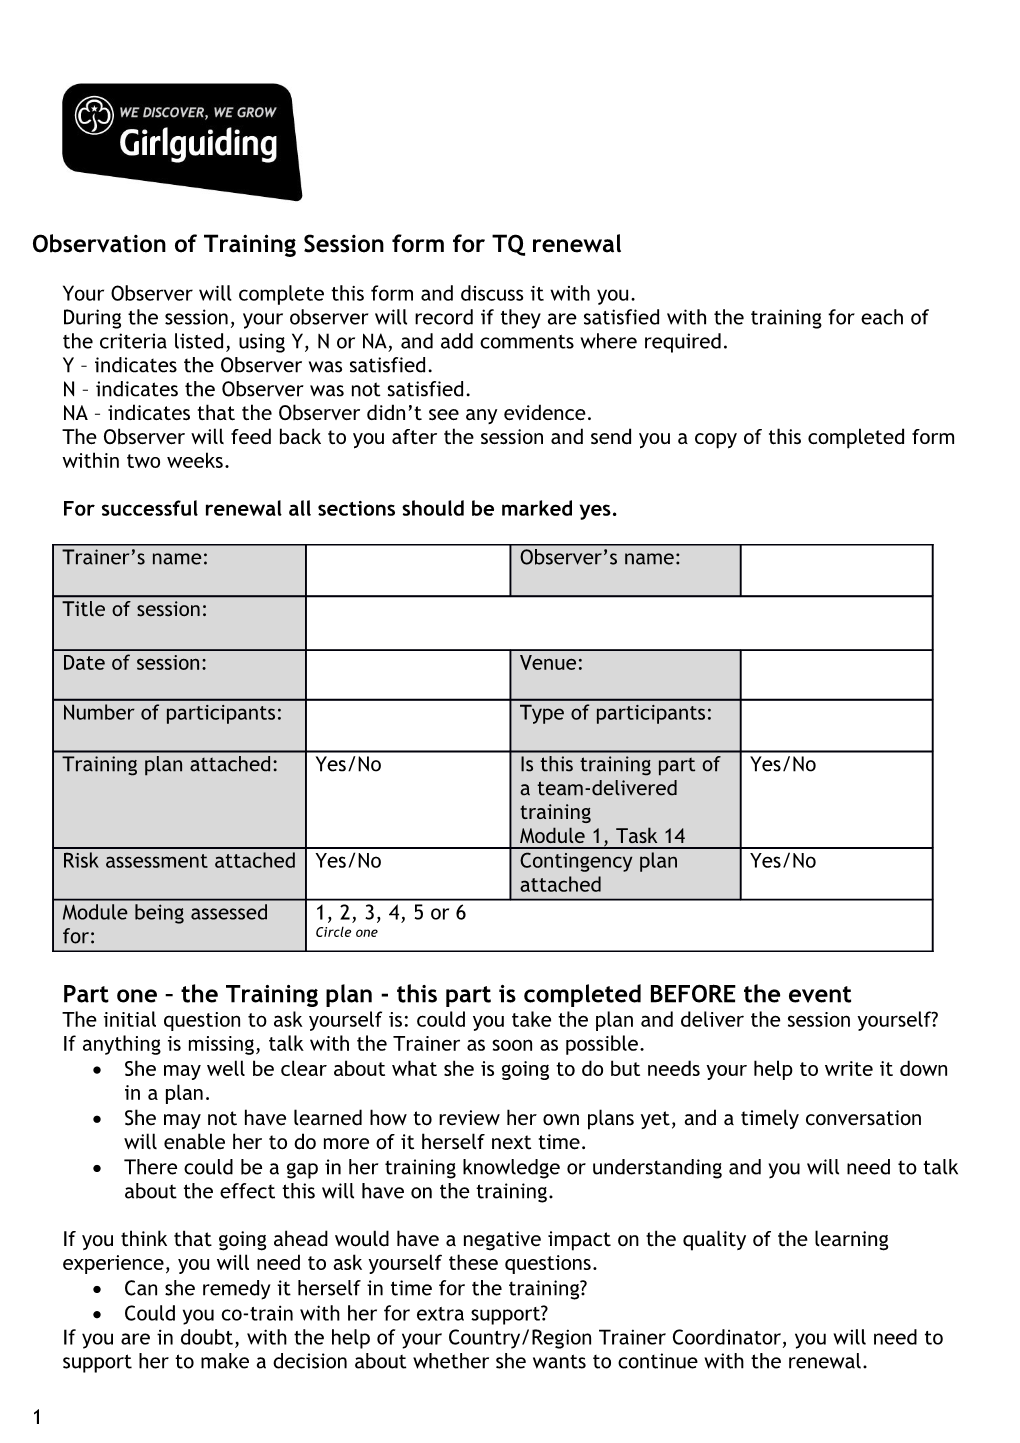 Observation of Training Session Form for TQ Renewal